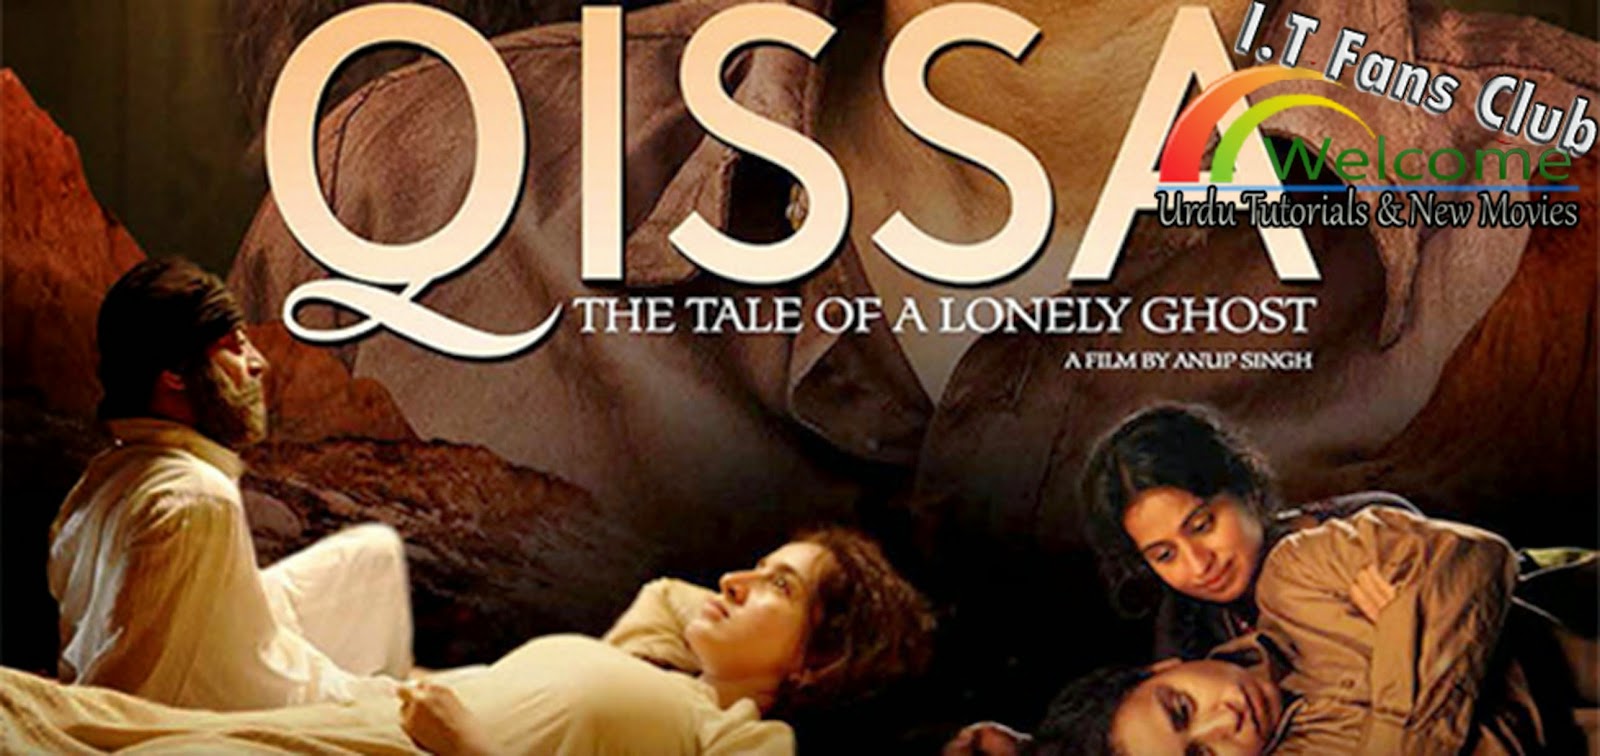 Qissa movie english subtitles download for movies